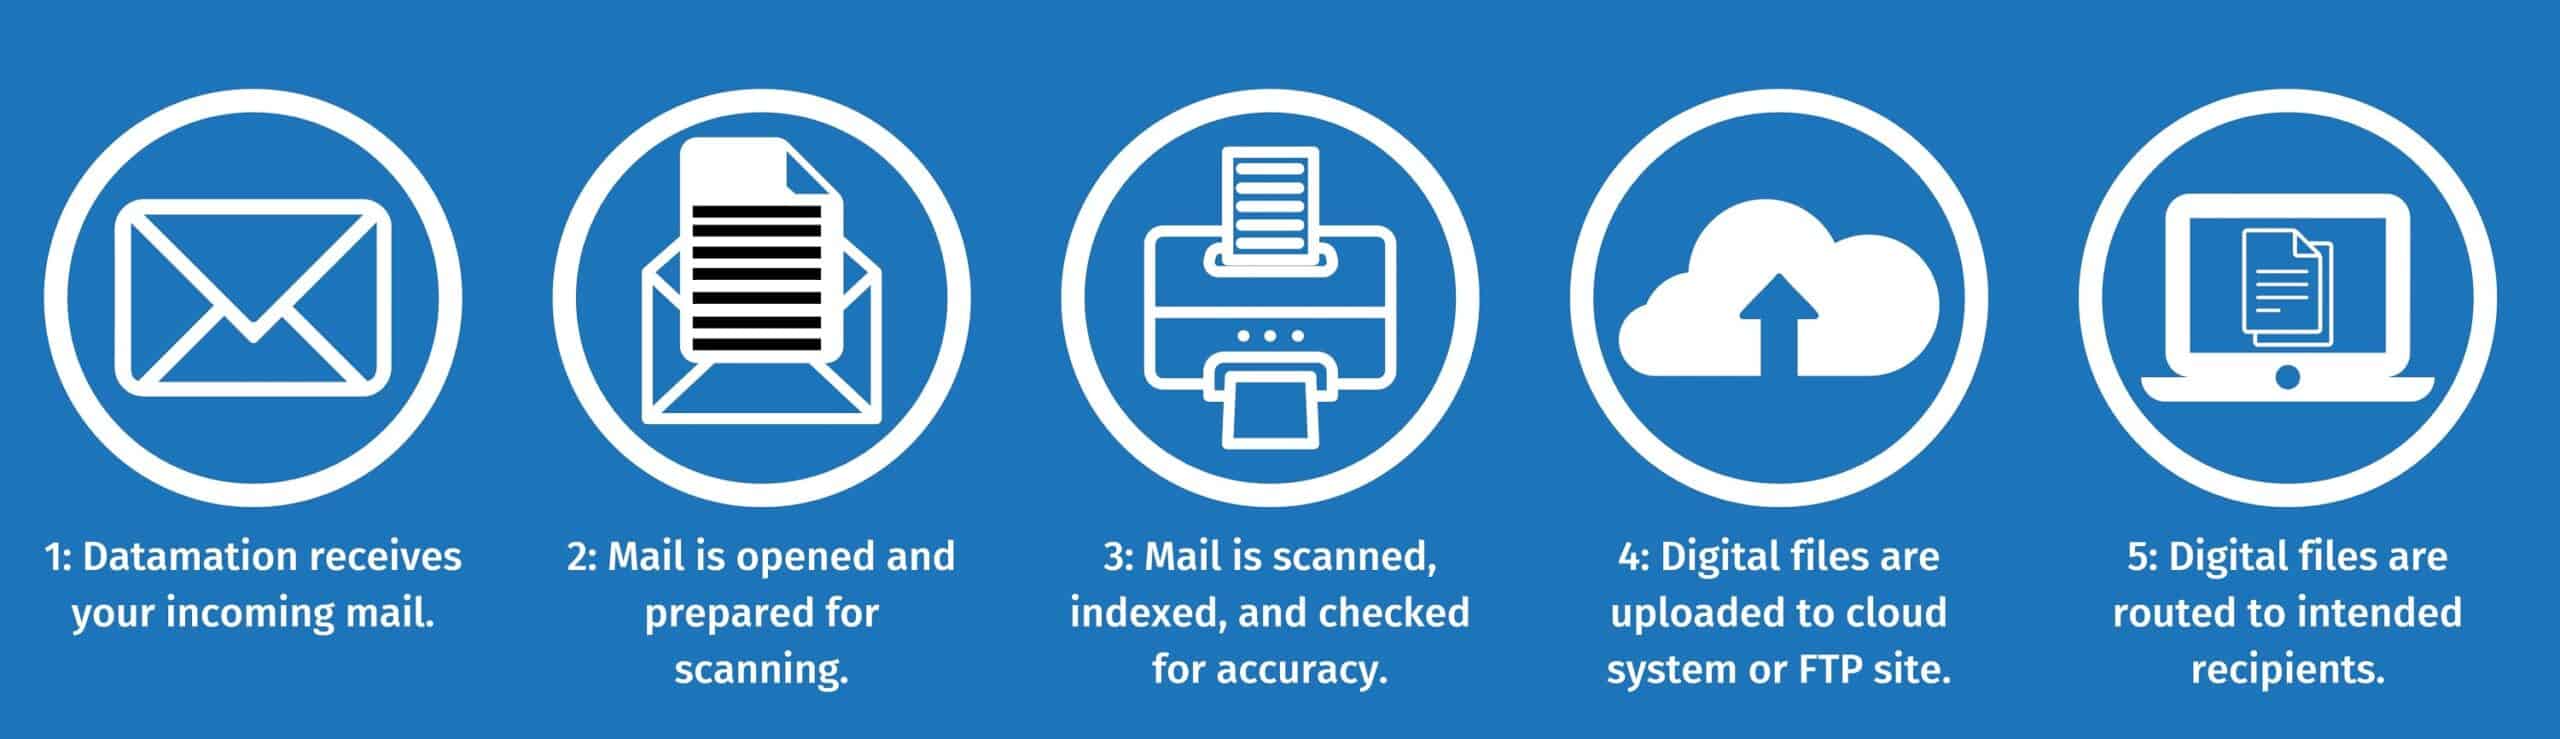 Datamation Digital Mailroom Process Icons